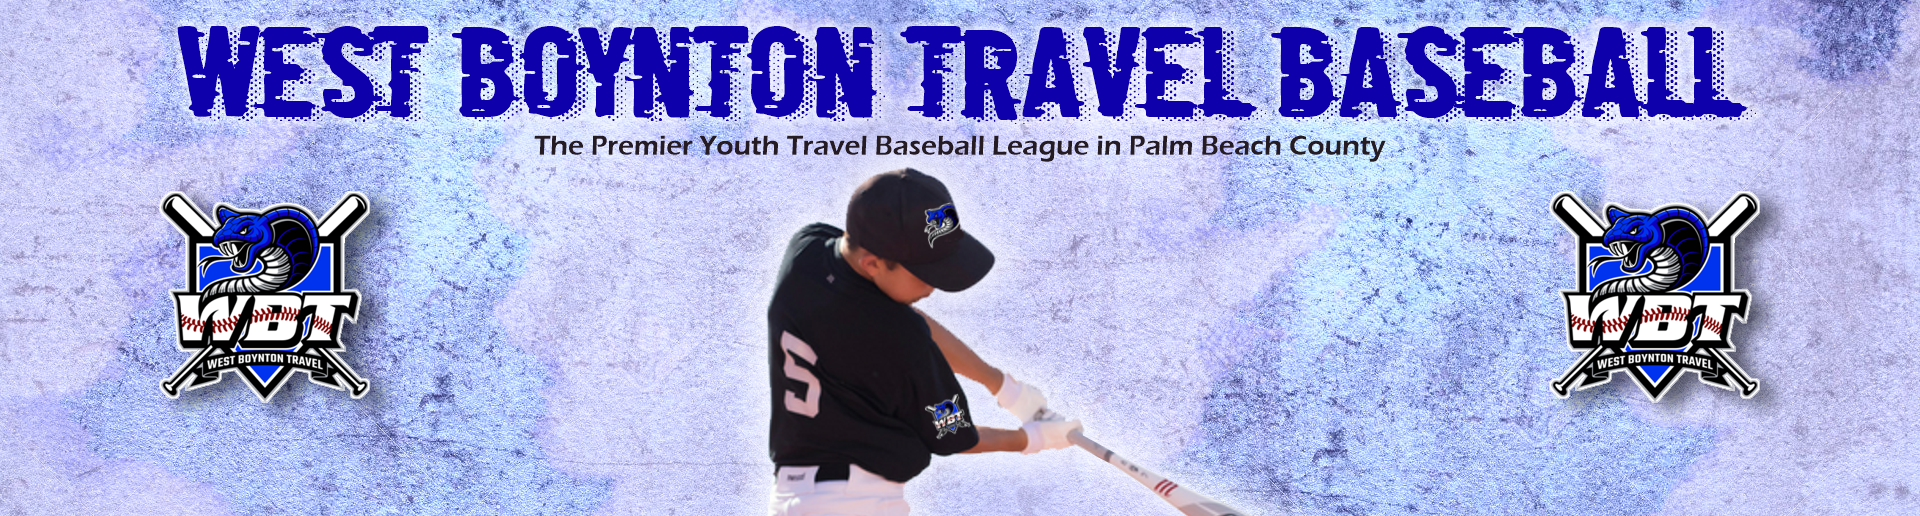 West Boynton Travel Baseball